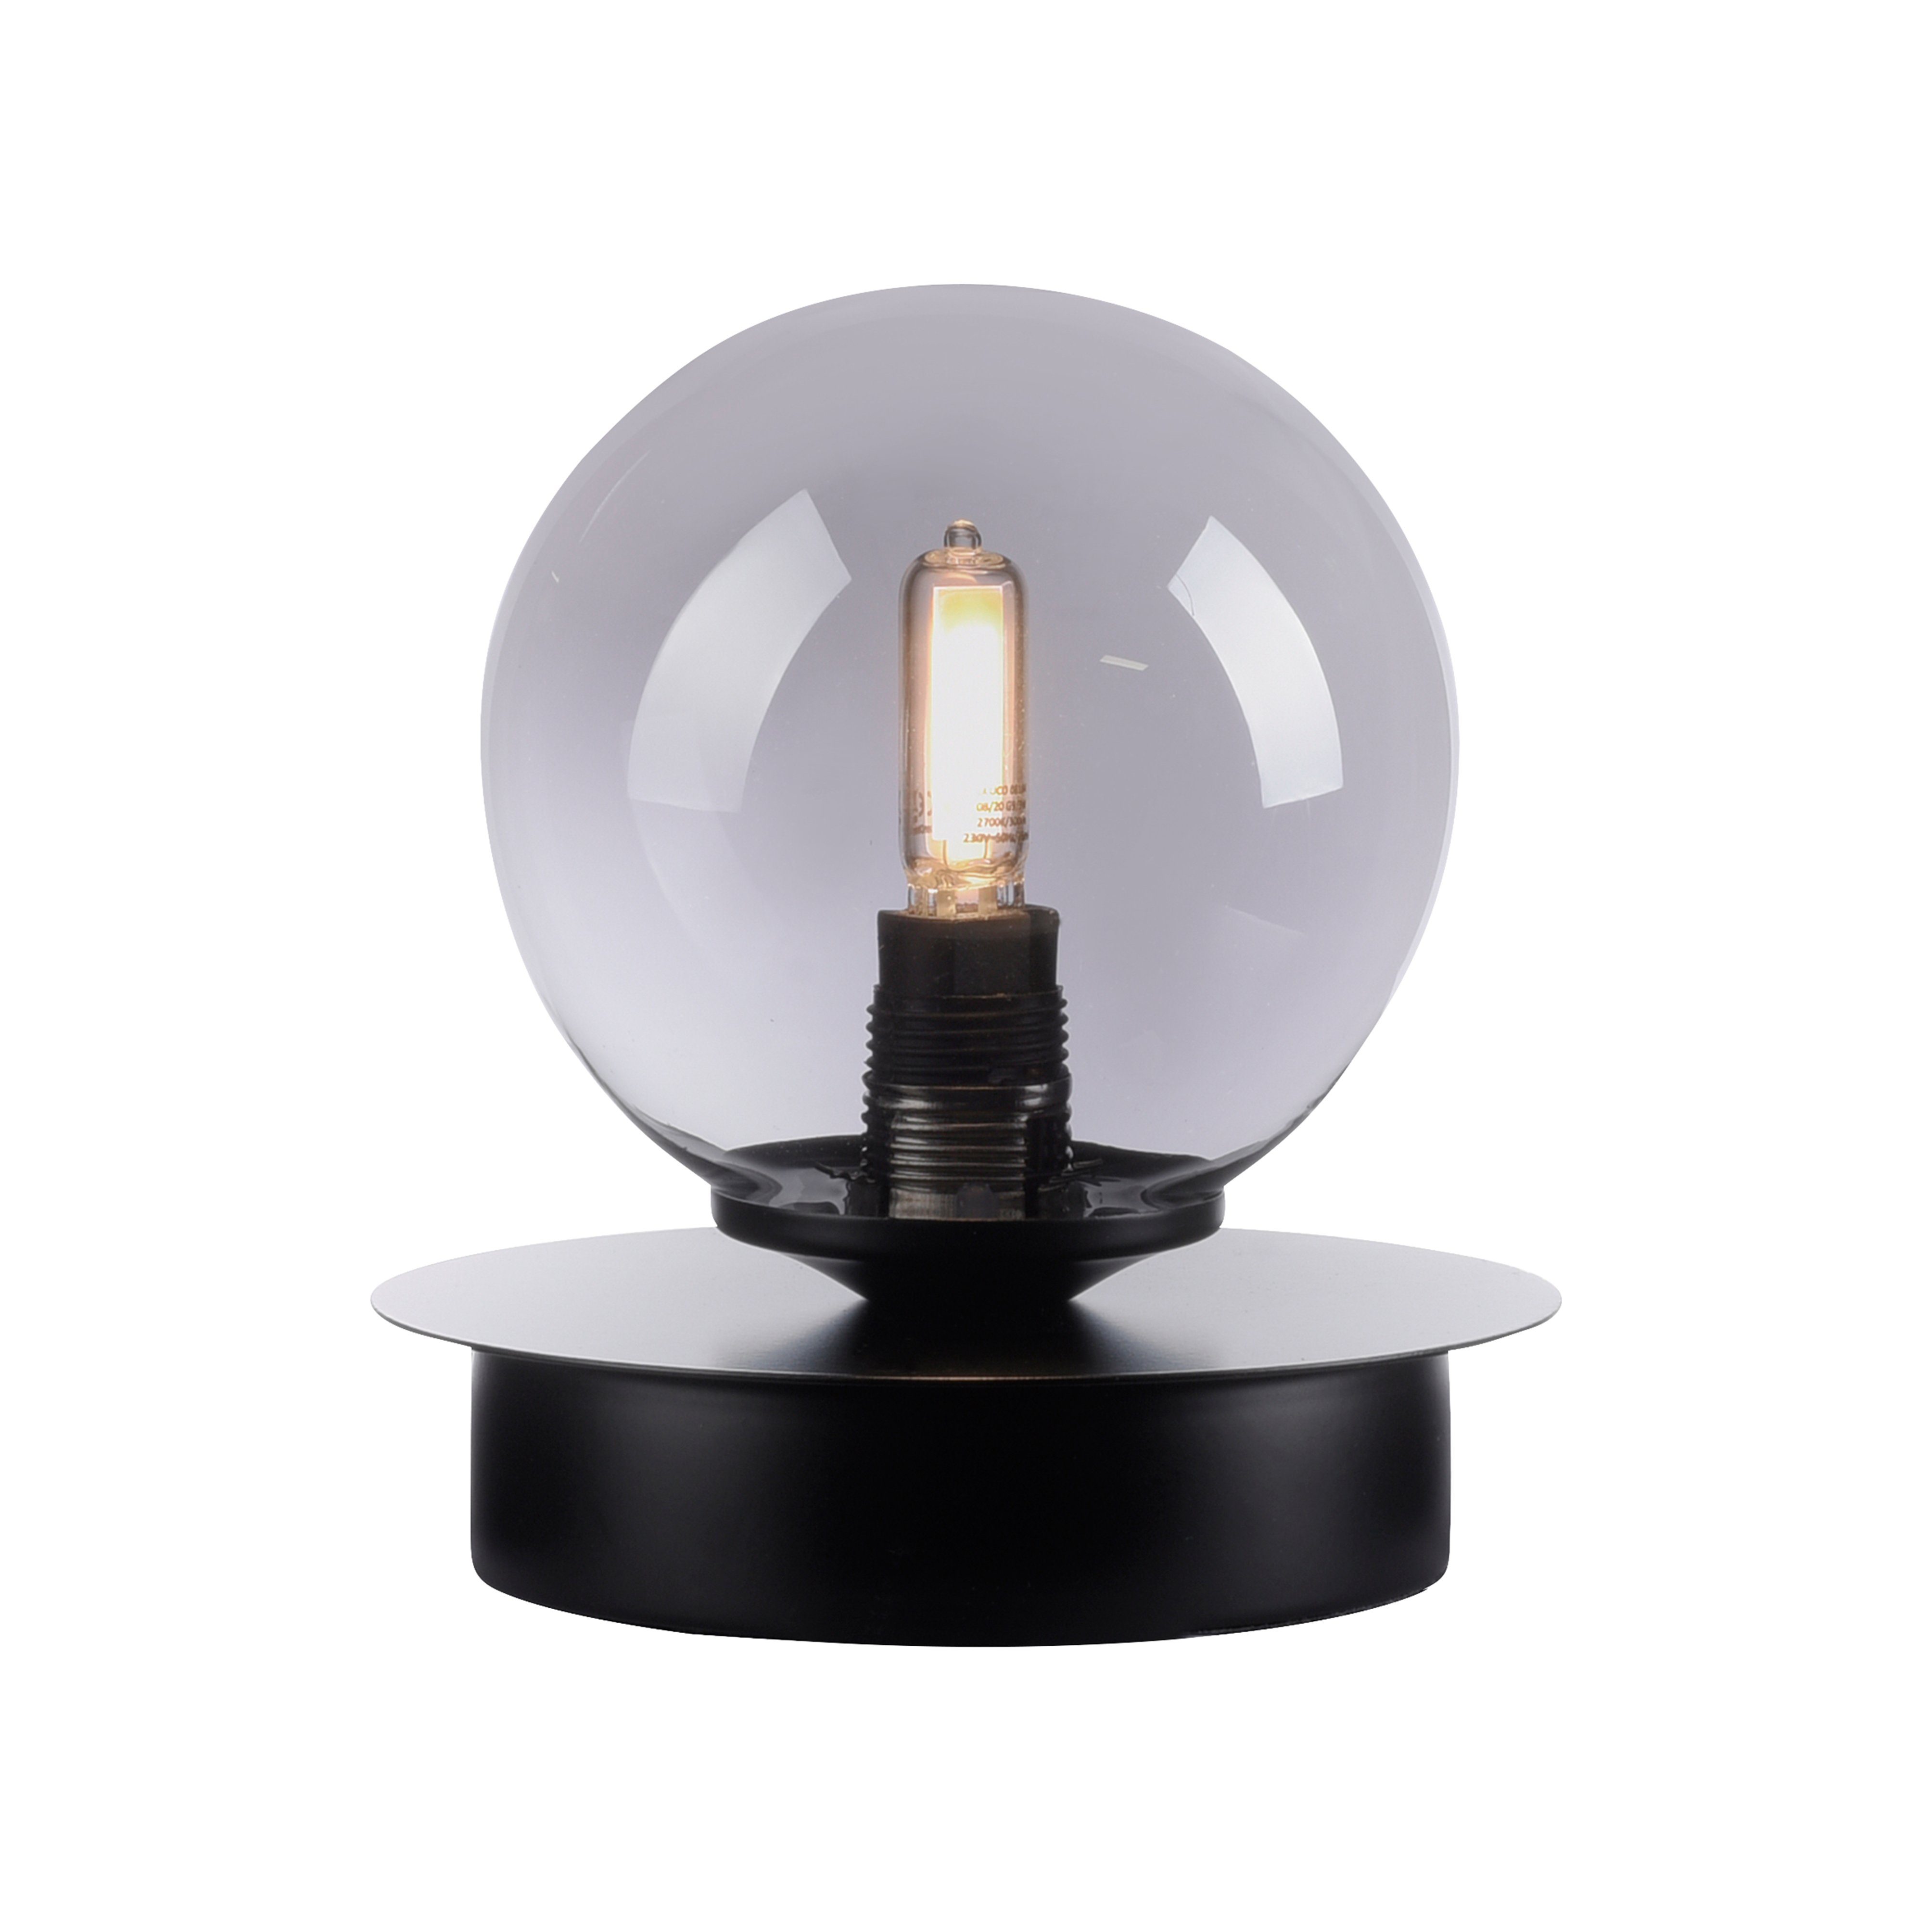 Paul Nachttischlampe Schalter, LED LED wechselbar, Warmweiß, WIDOW, Schnurschalter Neuhaus